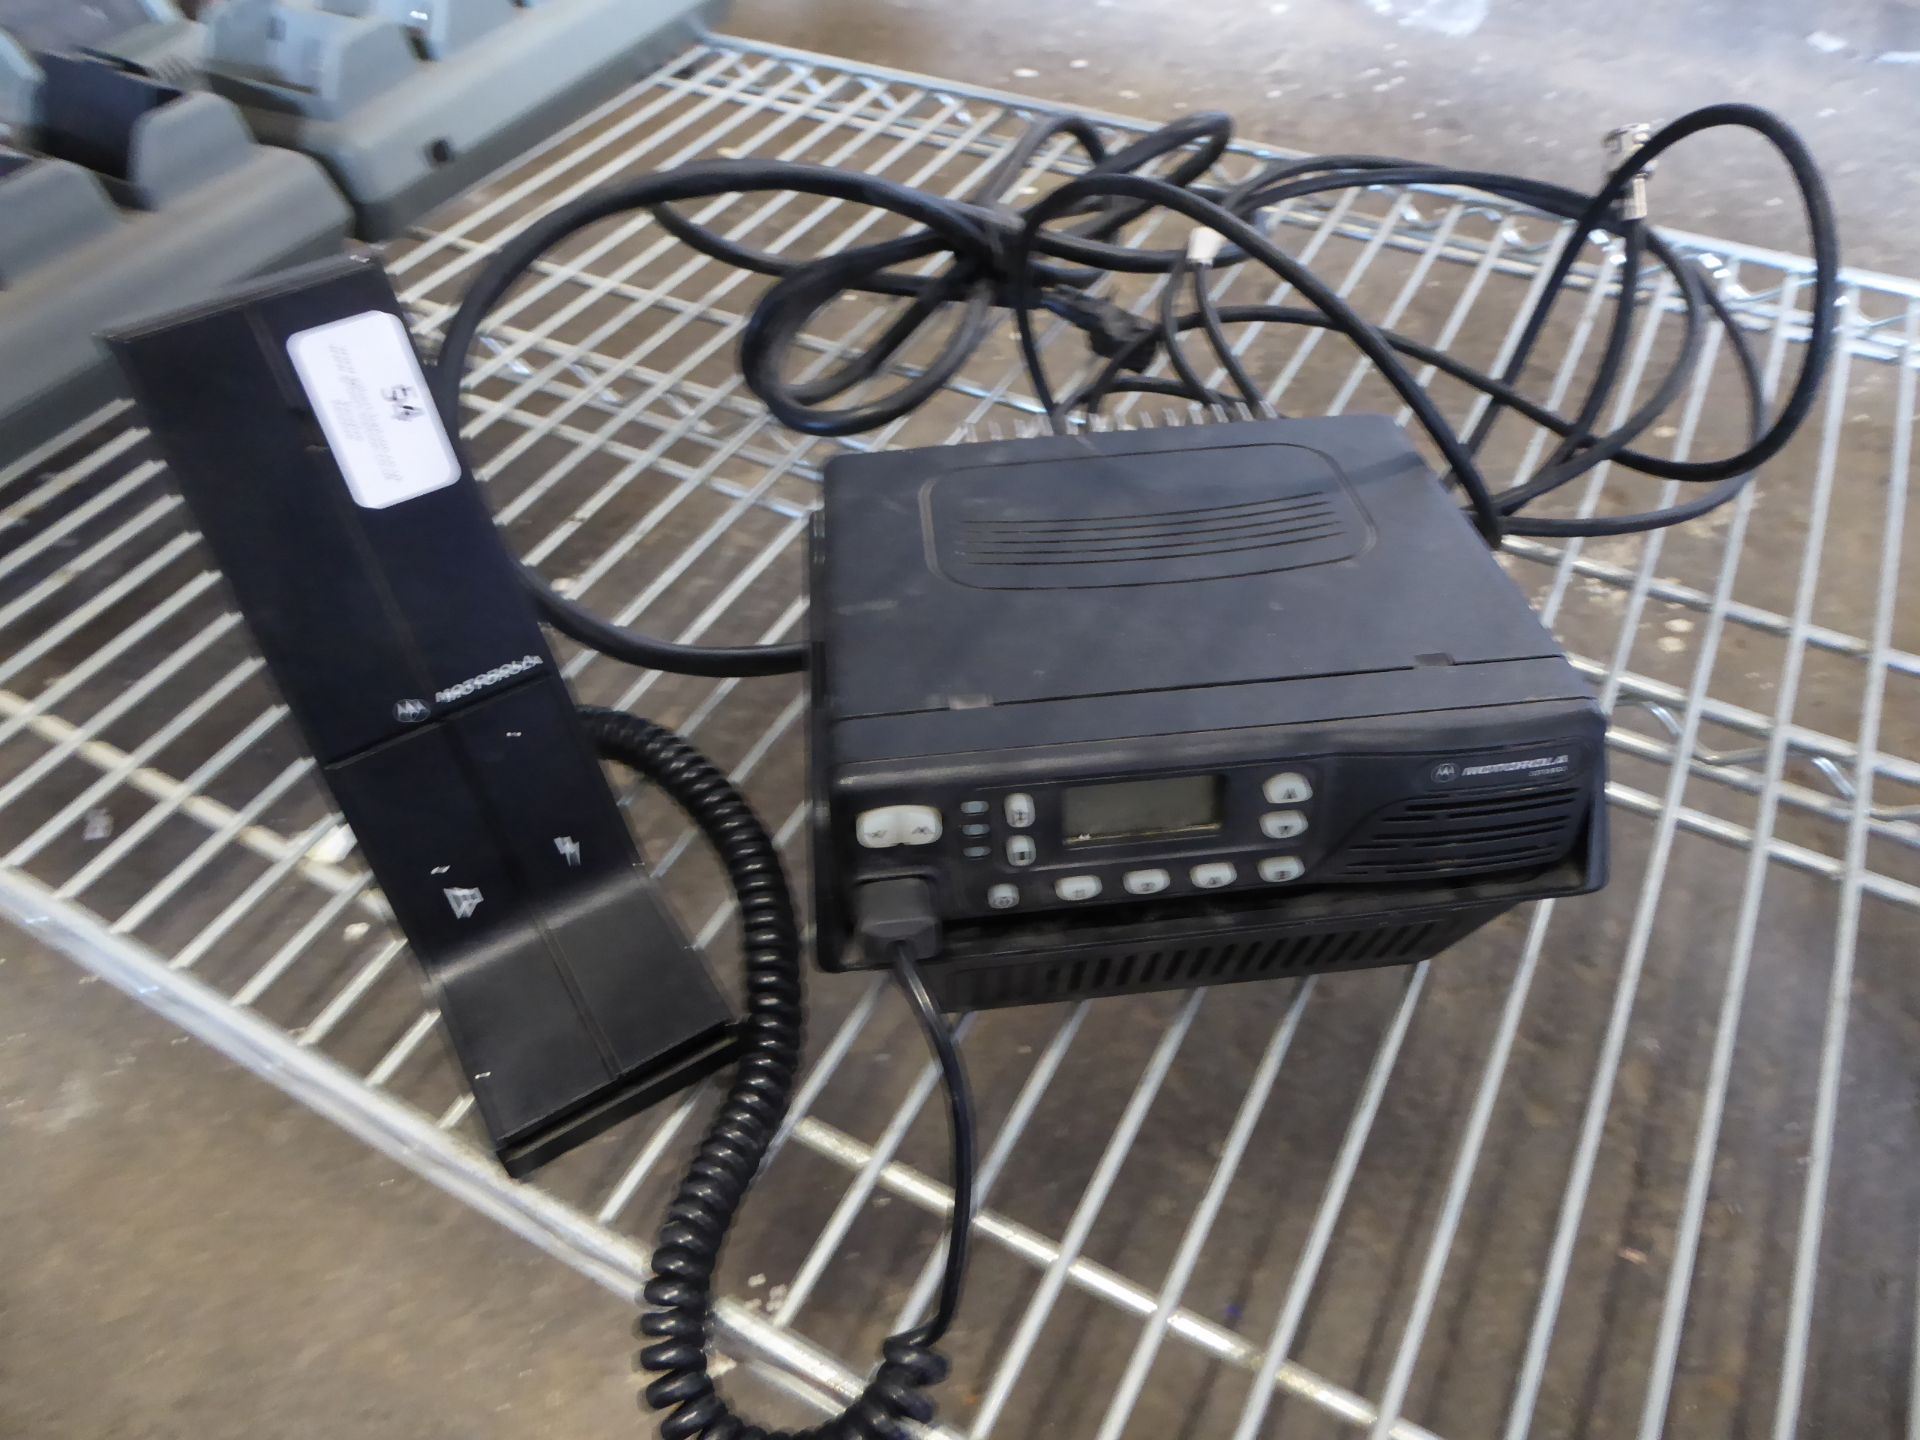 * Motorola GM350 two-way radio on stand